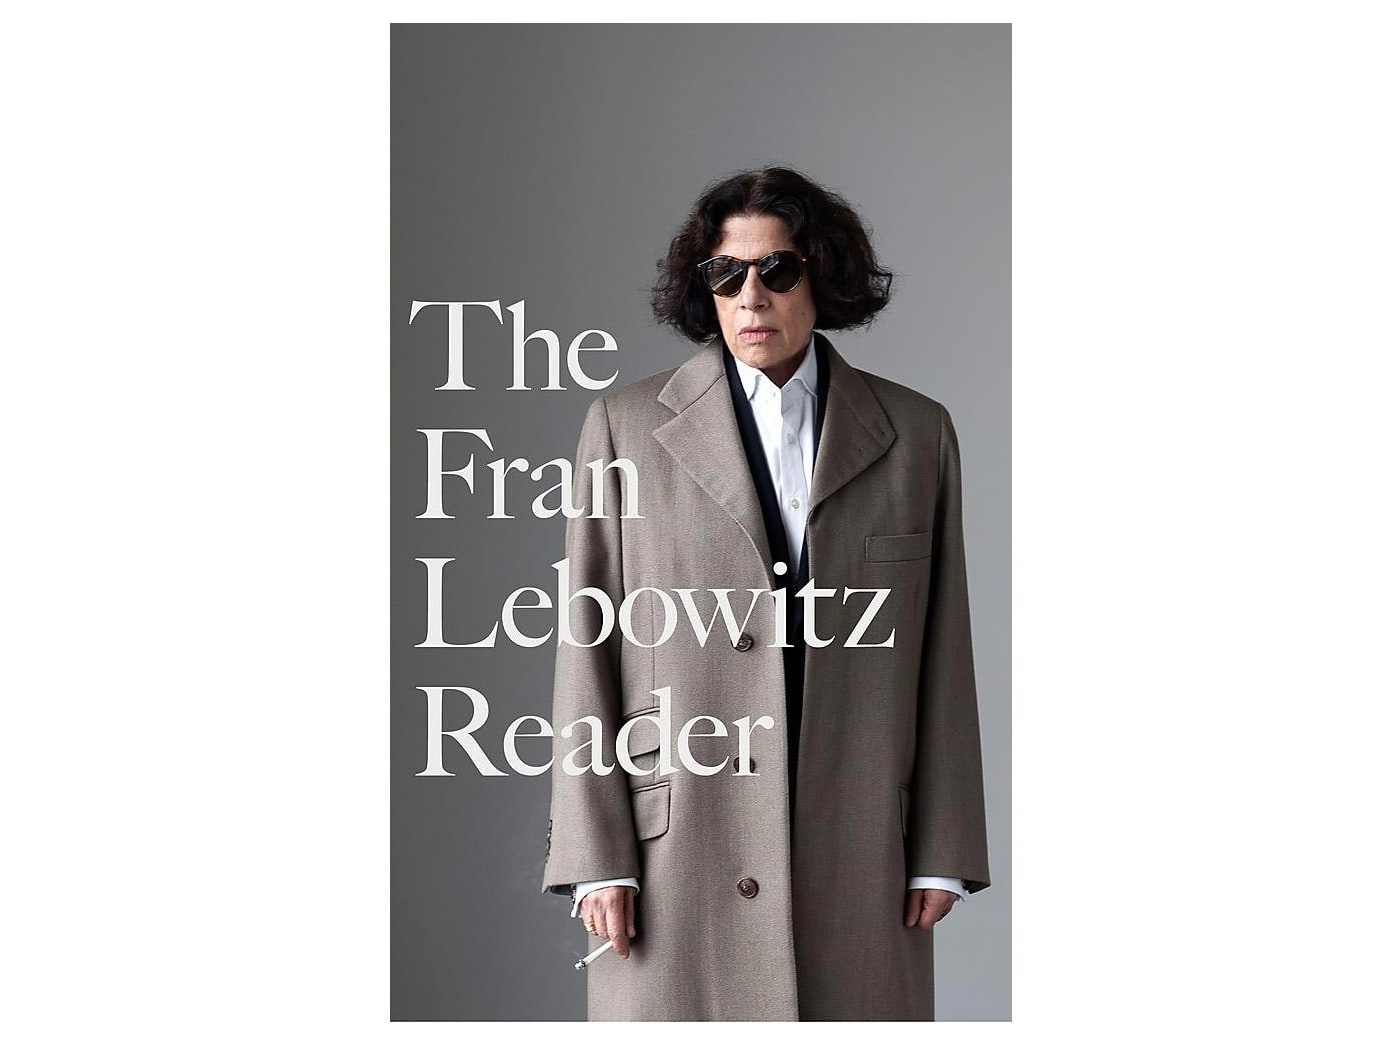 The Fran Lebowitz Reader by Fran Lebowitz, Vintage, $38